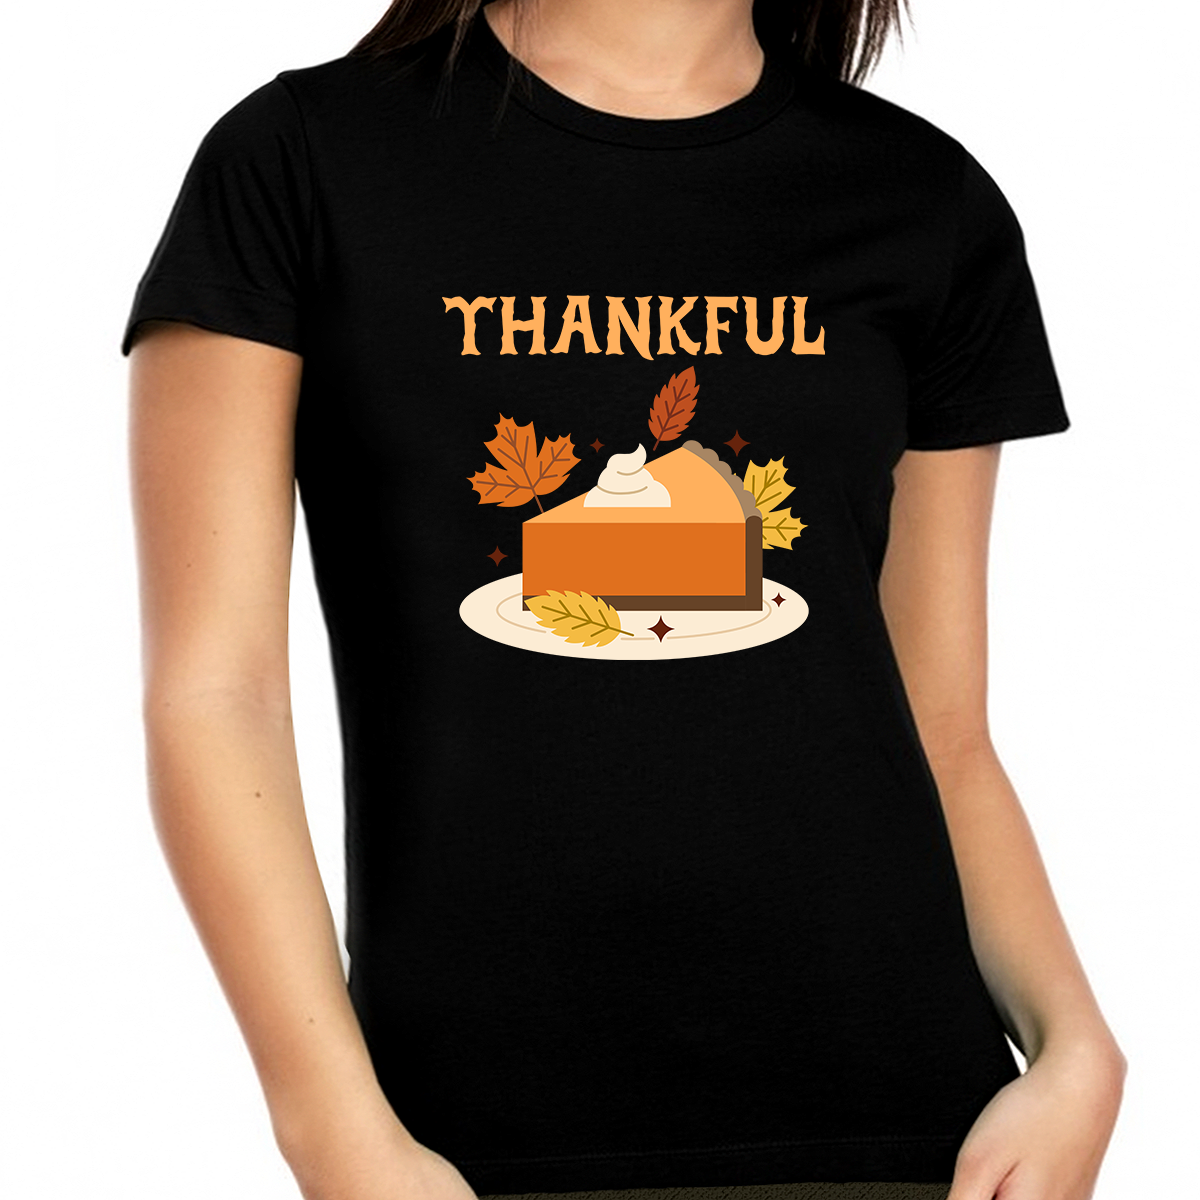 Womens Thanksgiving Shirt Turkey Shirt Thanksgiving Pie 1X 2X 3X 4X 5X Plus Size Thankful Shirts for Women